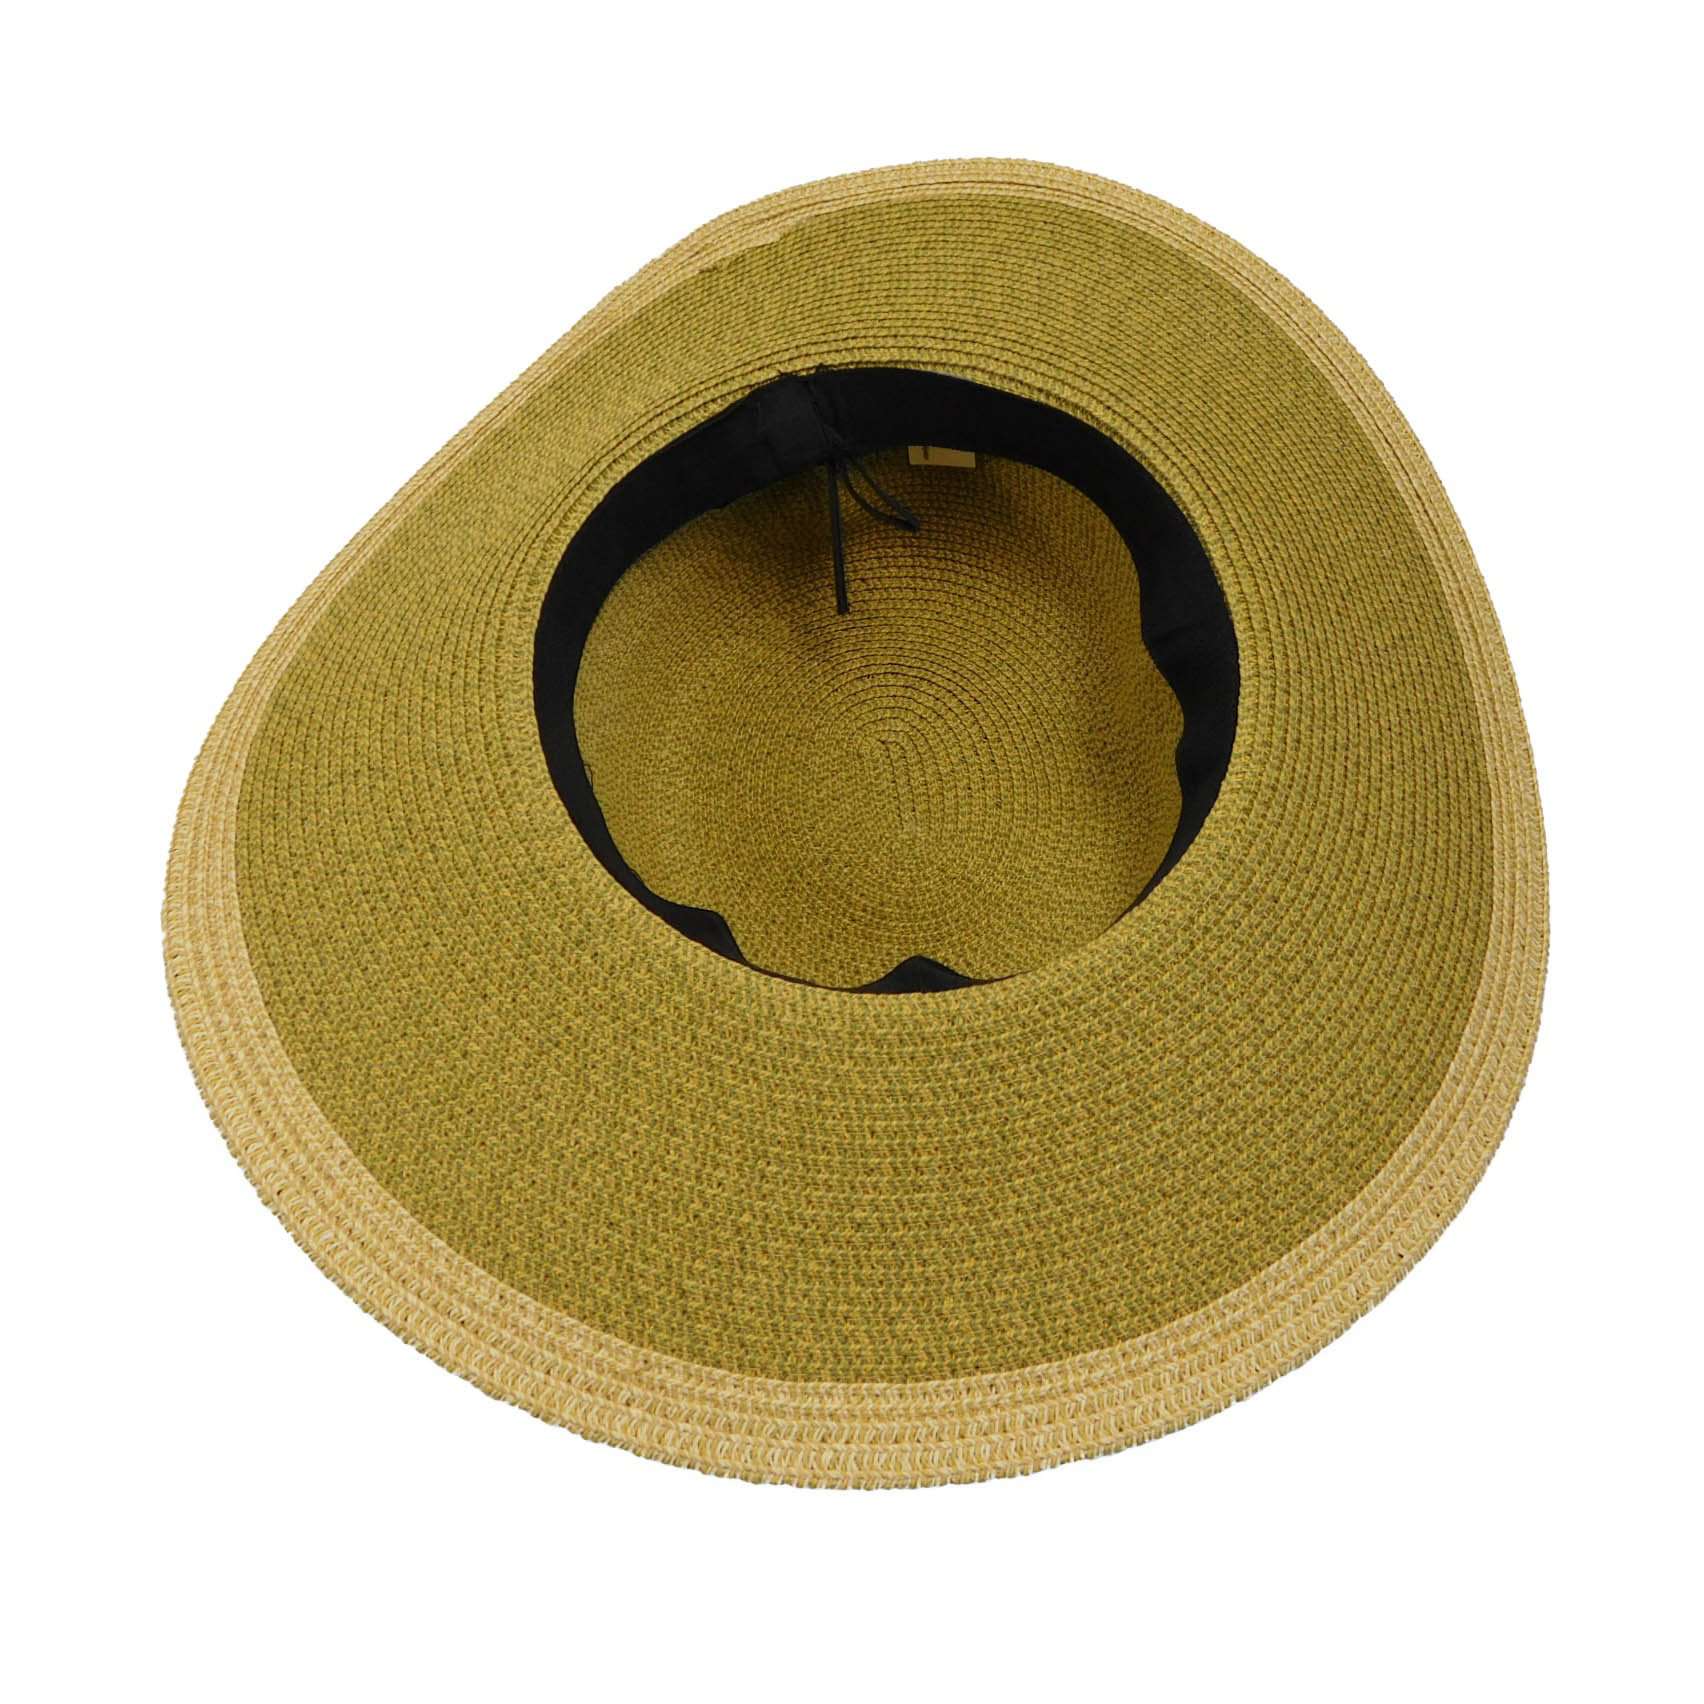 Flat Brim Sun Hat with Contrast Edge Floppy Hat Jeanne Simmons    